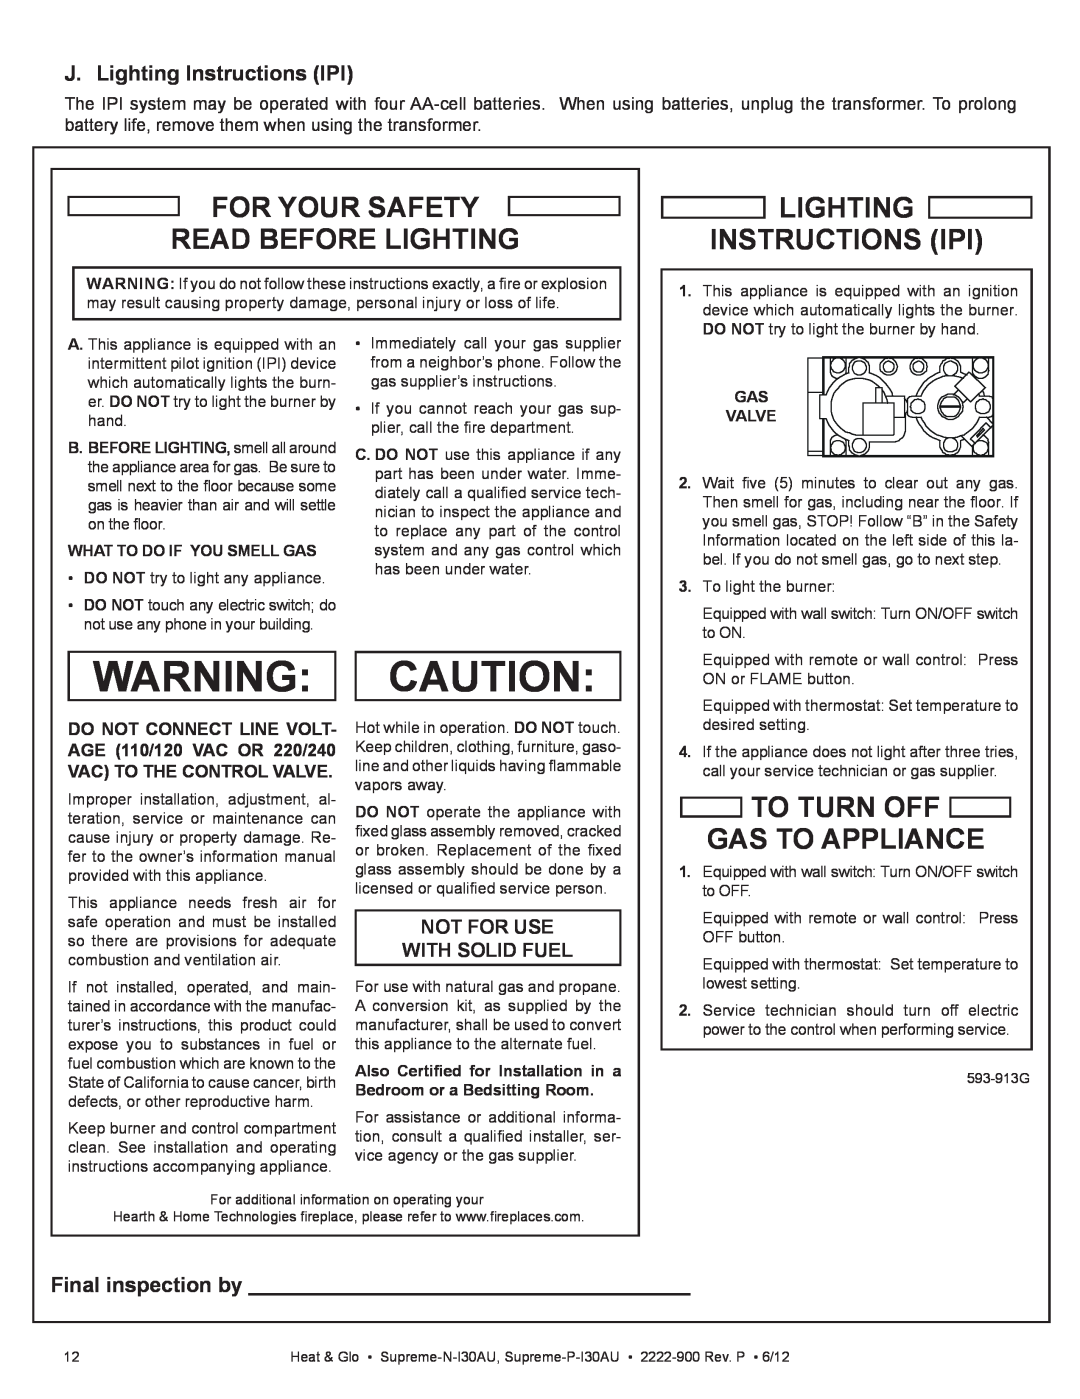 Heat & Glo LifeStyle SUPREME-P-I30AU J. Lighting Instructions IPI, Final inspection by, Lighting Instructions Ipi 